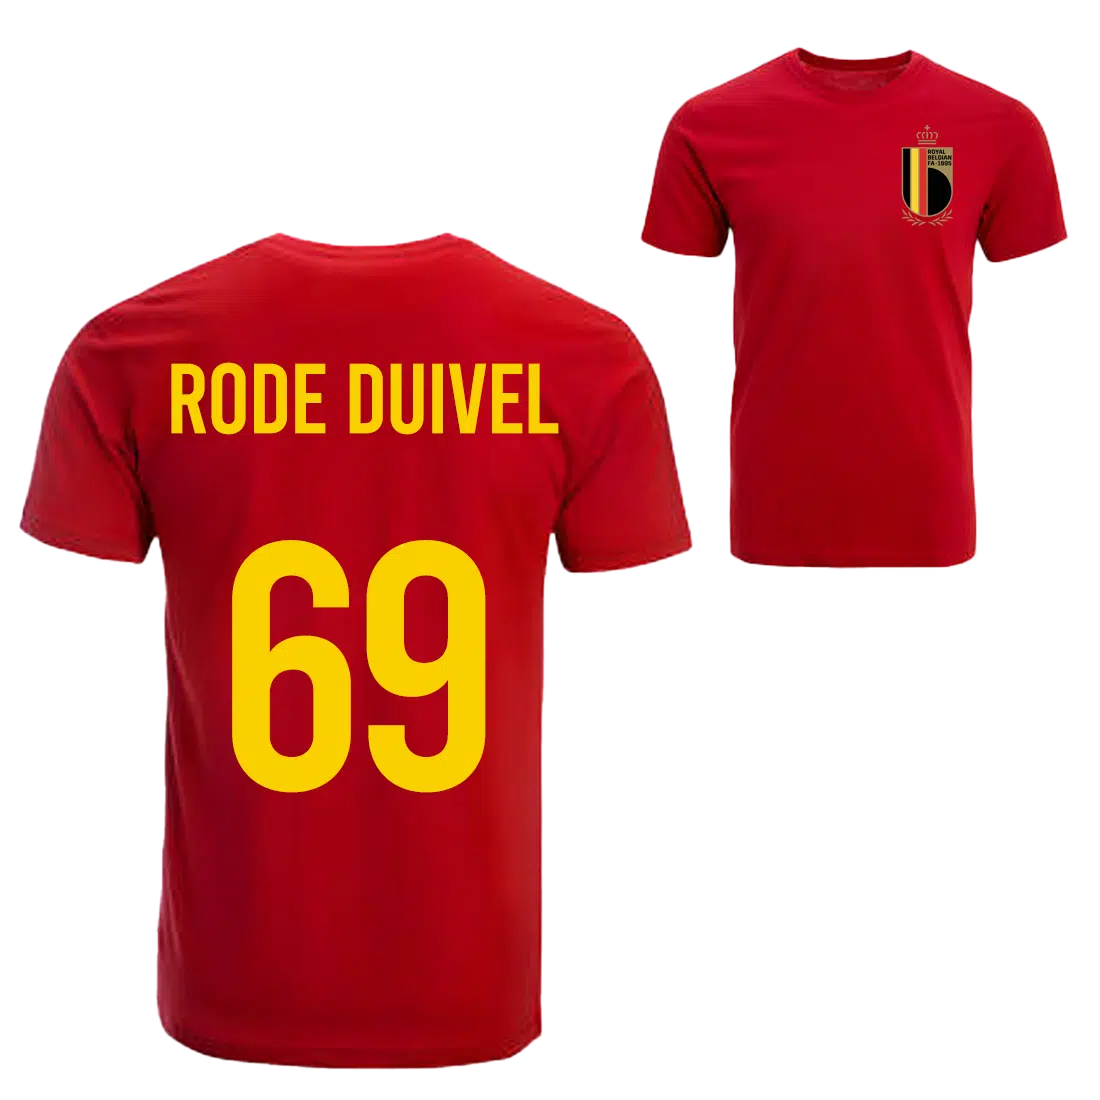 Rode Duivel Belgie voetbalshirt sfeer